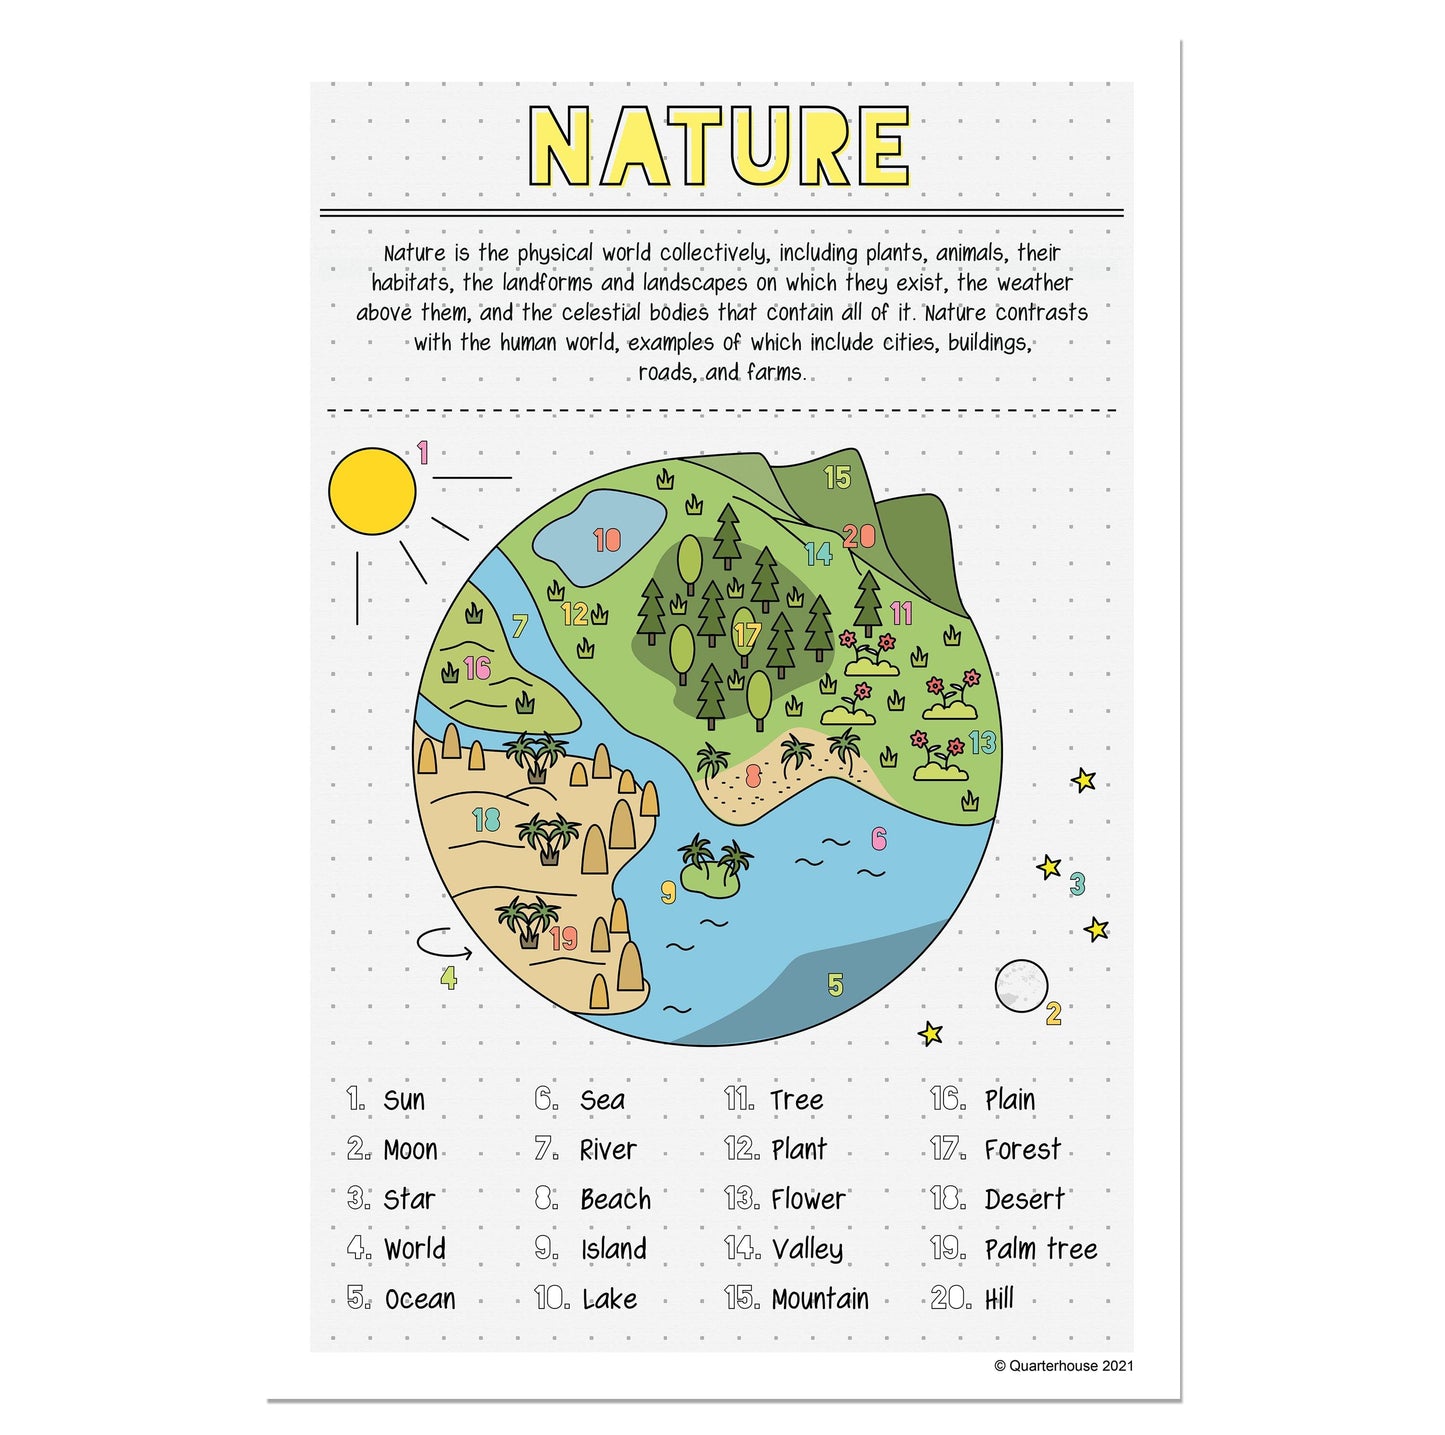 Quarterhouse Landforms and Habitats in Nature Summary Poster Poster, Social Studies Classroom Materials for Teachers